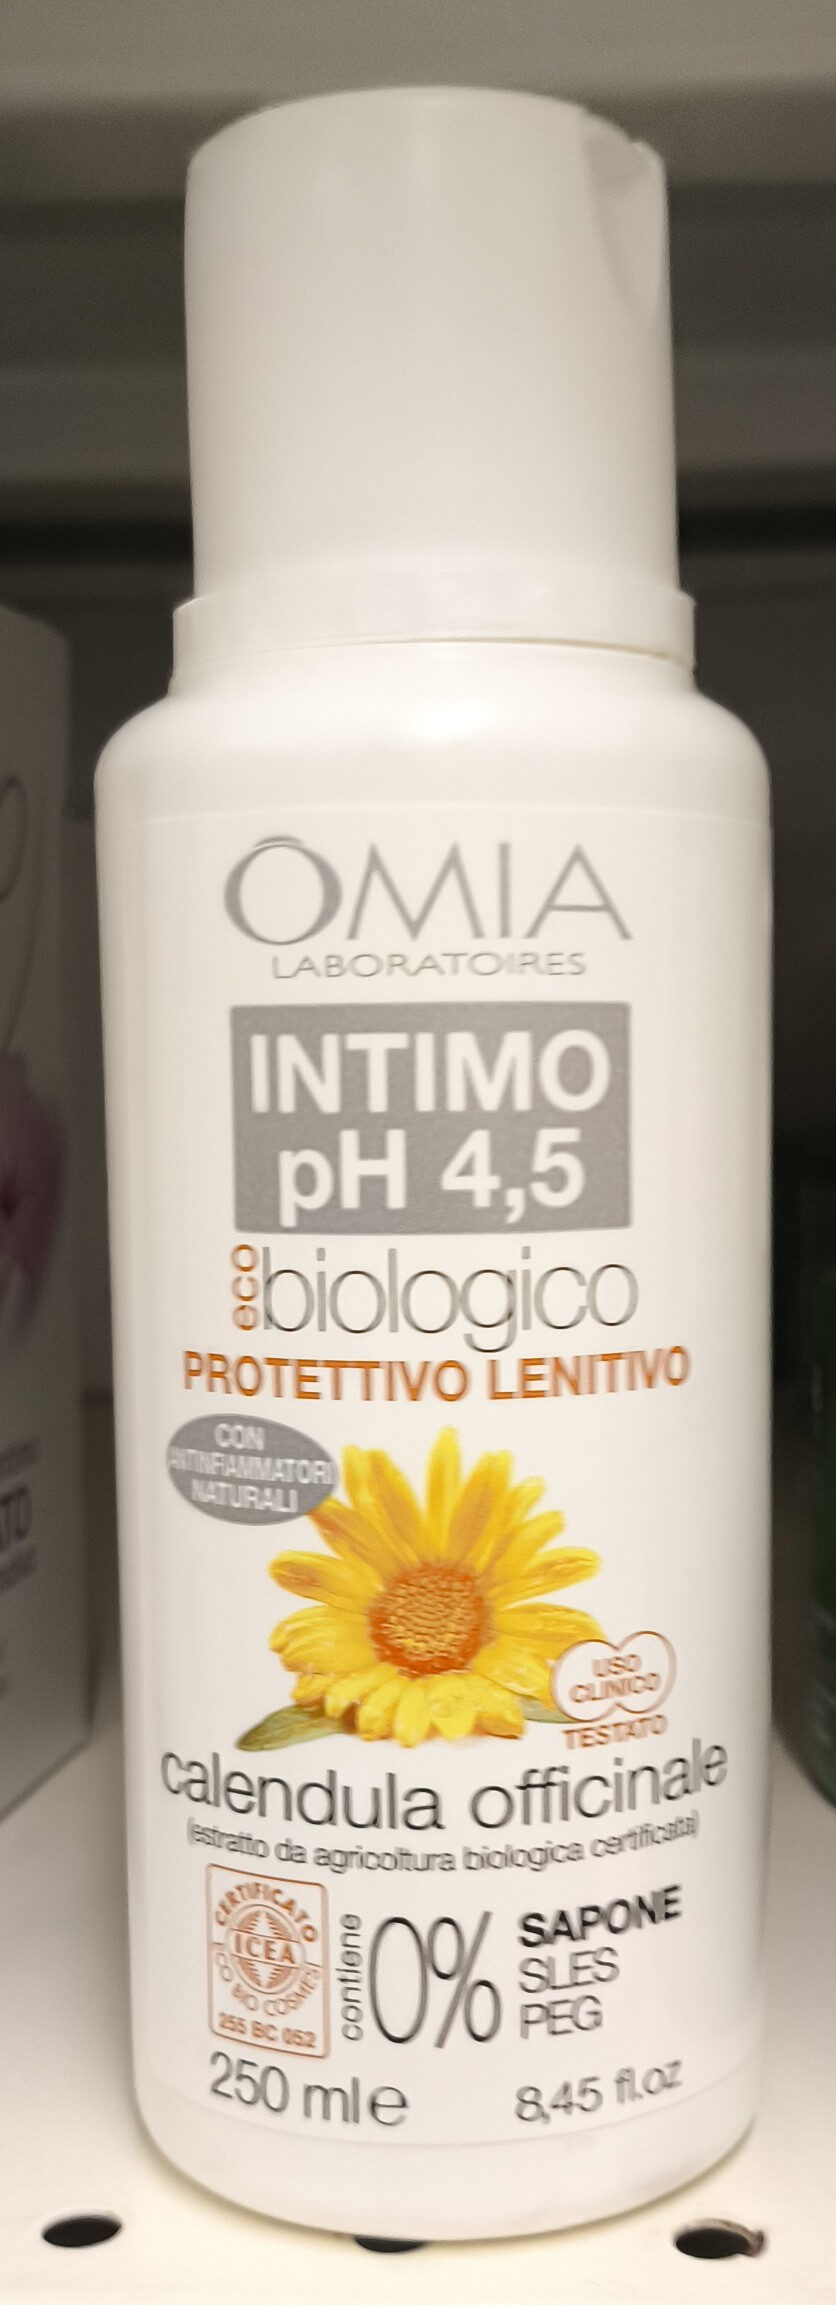 Intimo ph 4,5 - Produkt - it